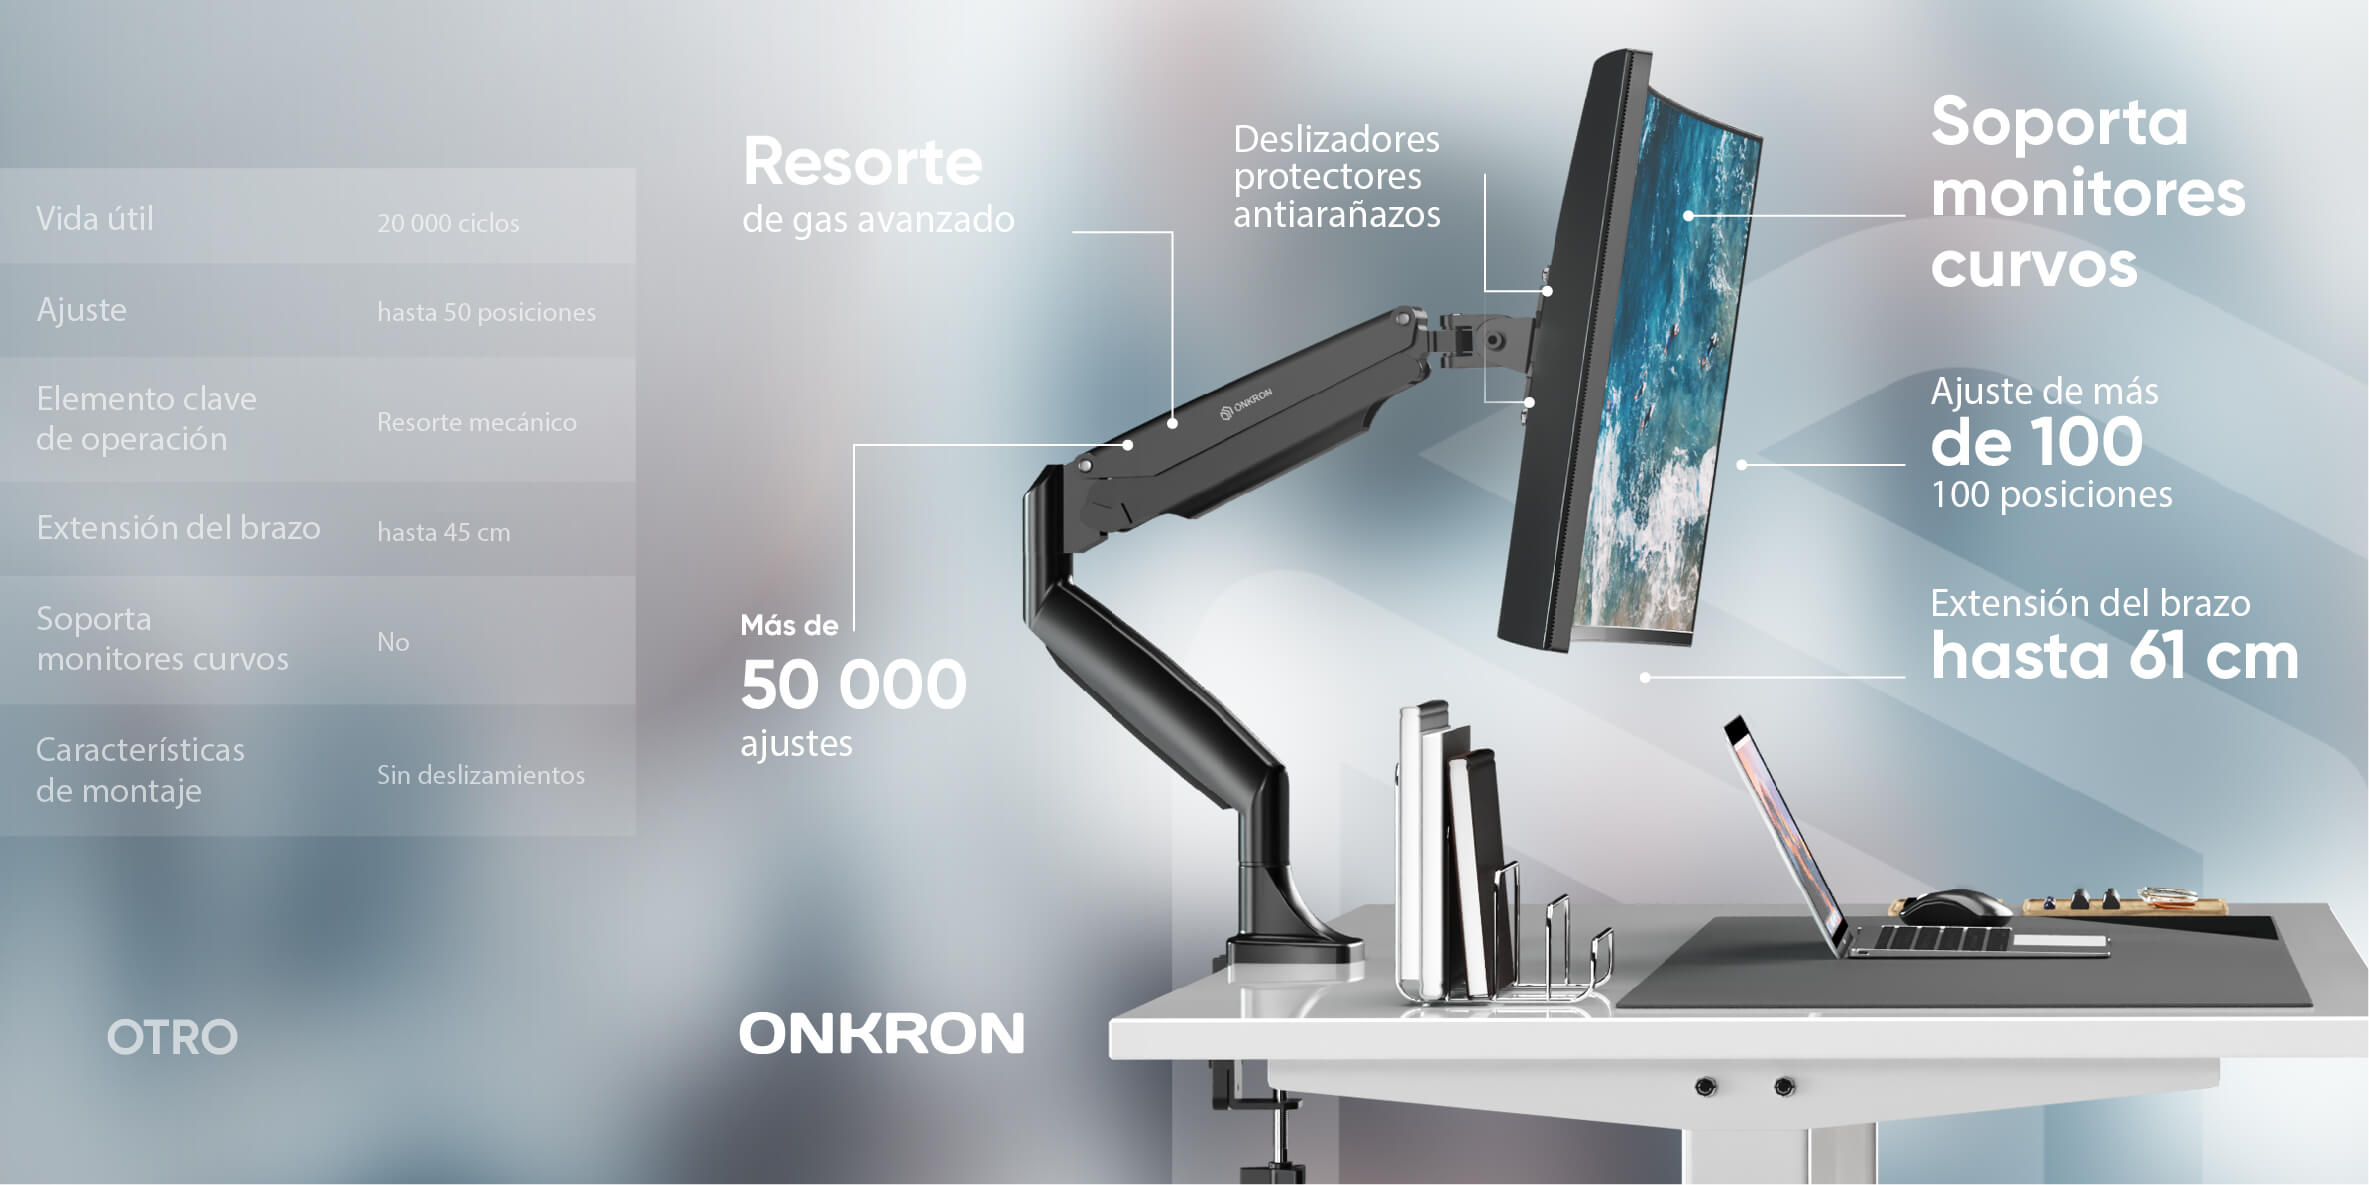 ONKRON Soporte de brazo articulado para Monitor 13-32, peso max. 9 kg, negro G100-B